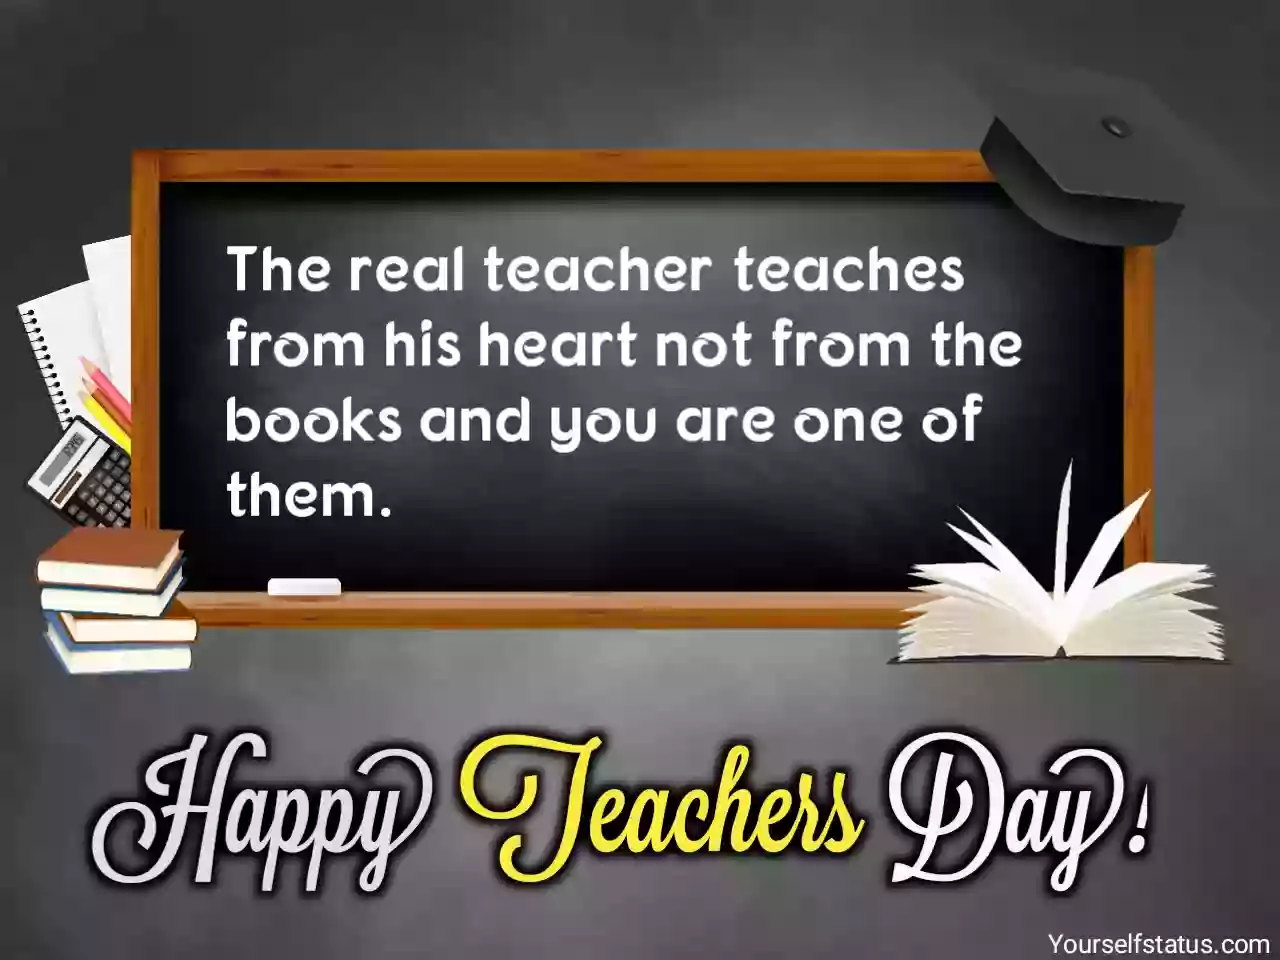 Teachers day wishes 2021